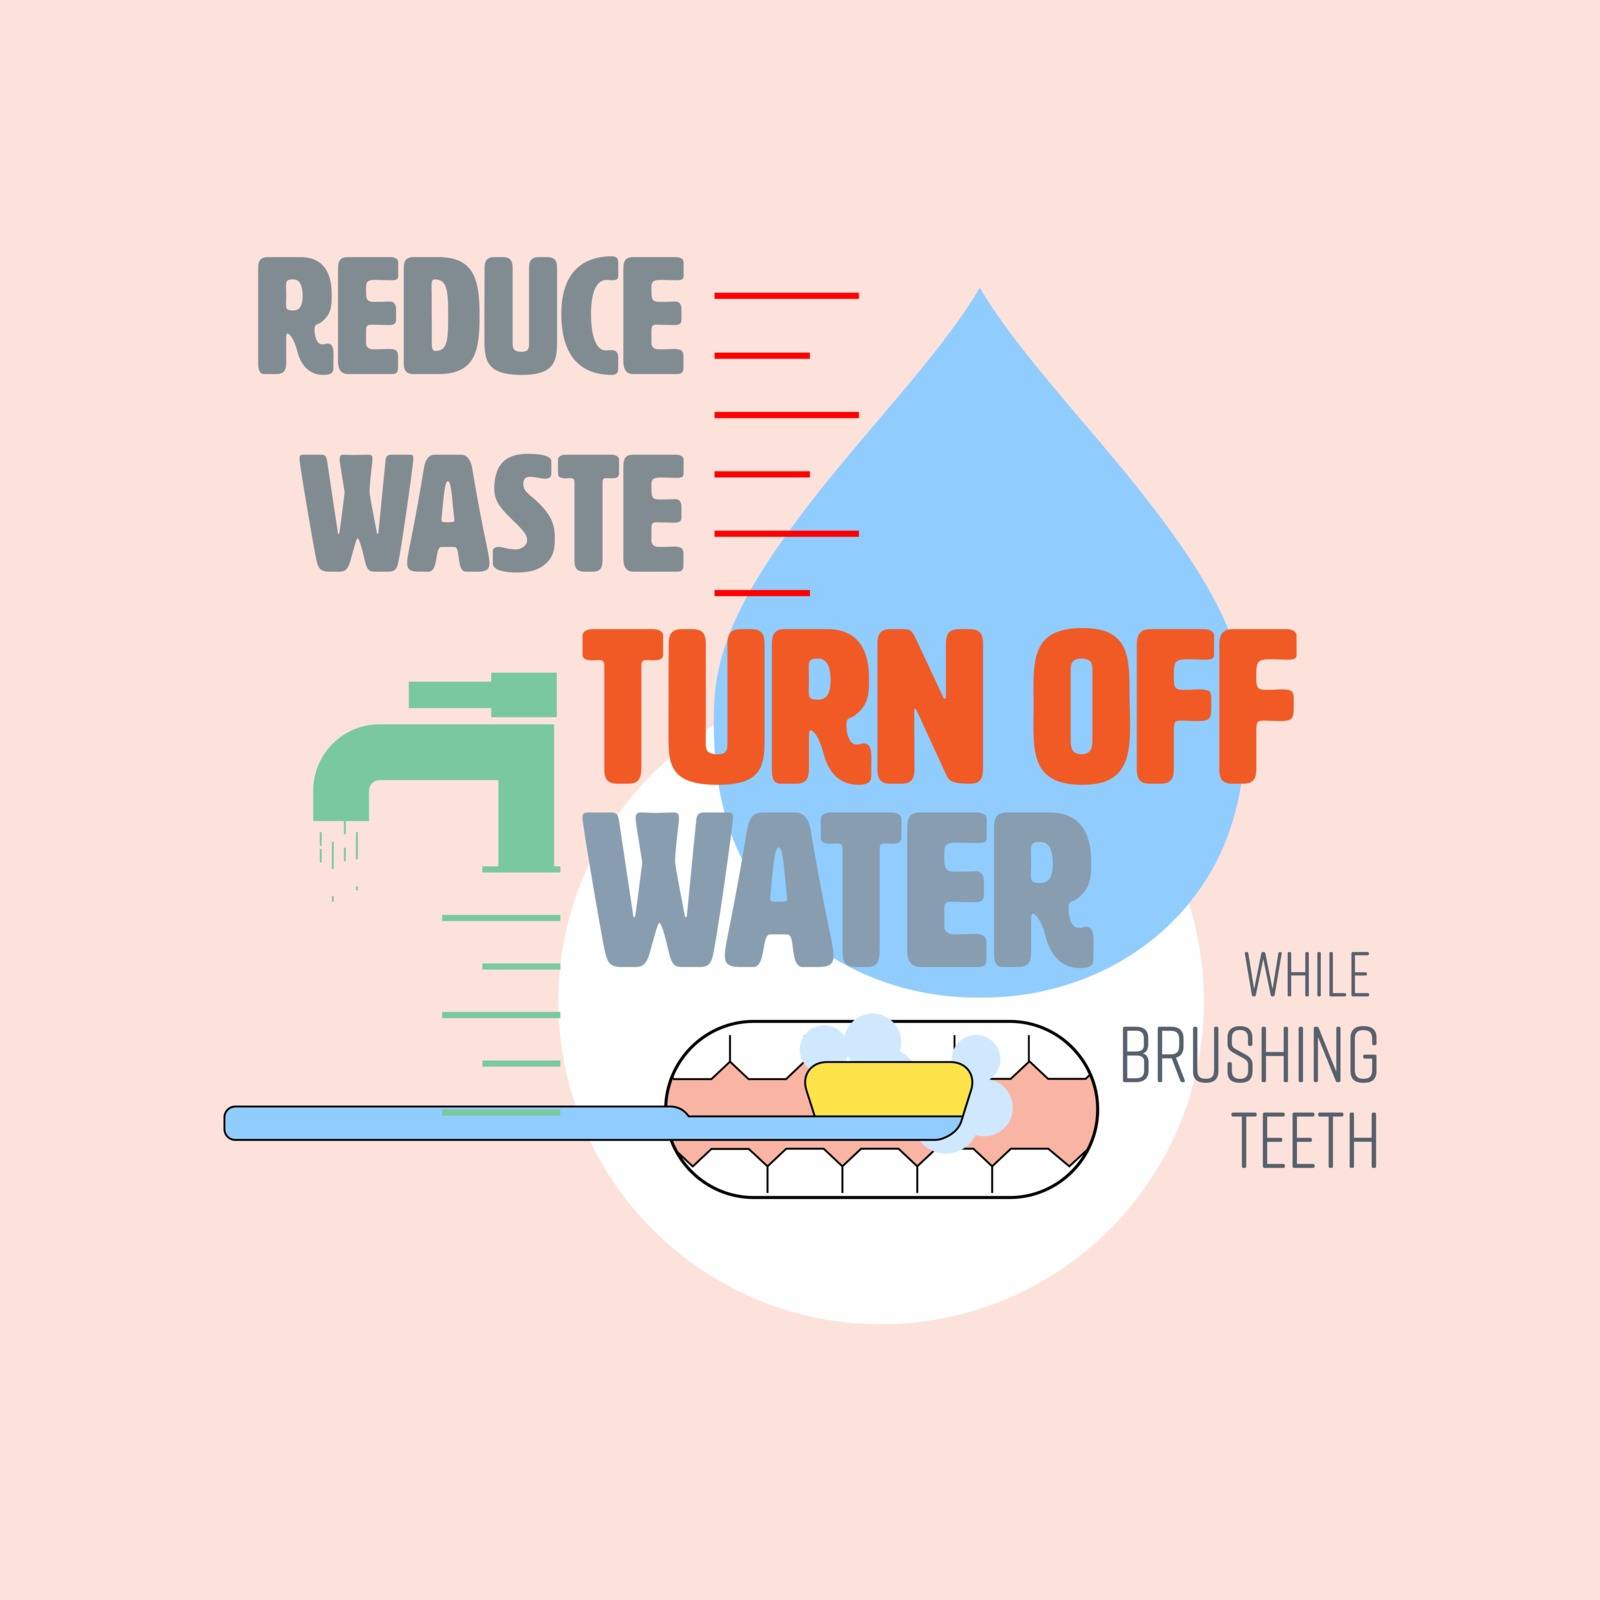 Reduce Waste Water Turn Off by Chiamsakul